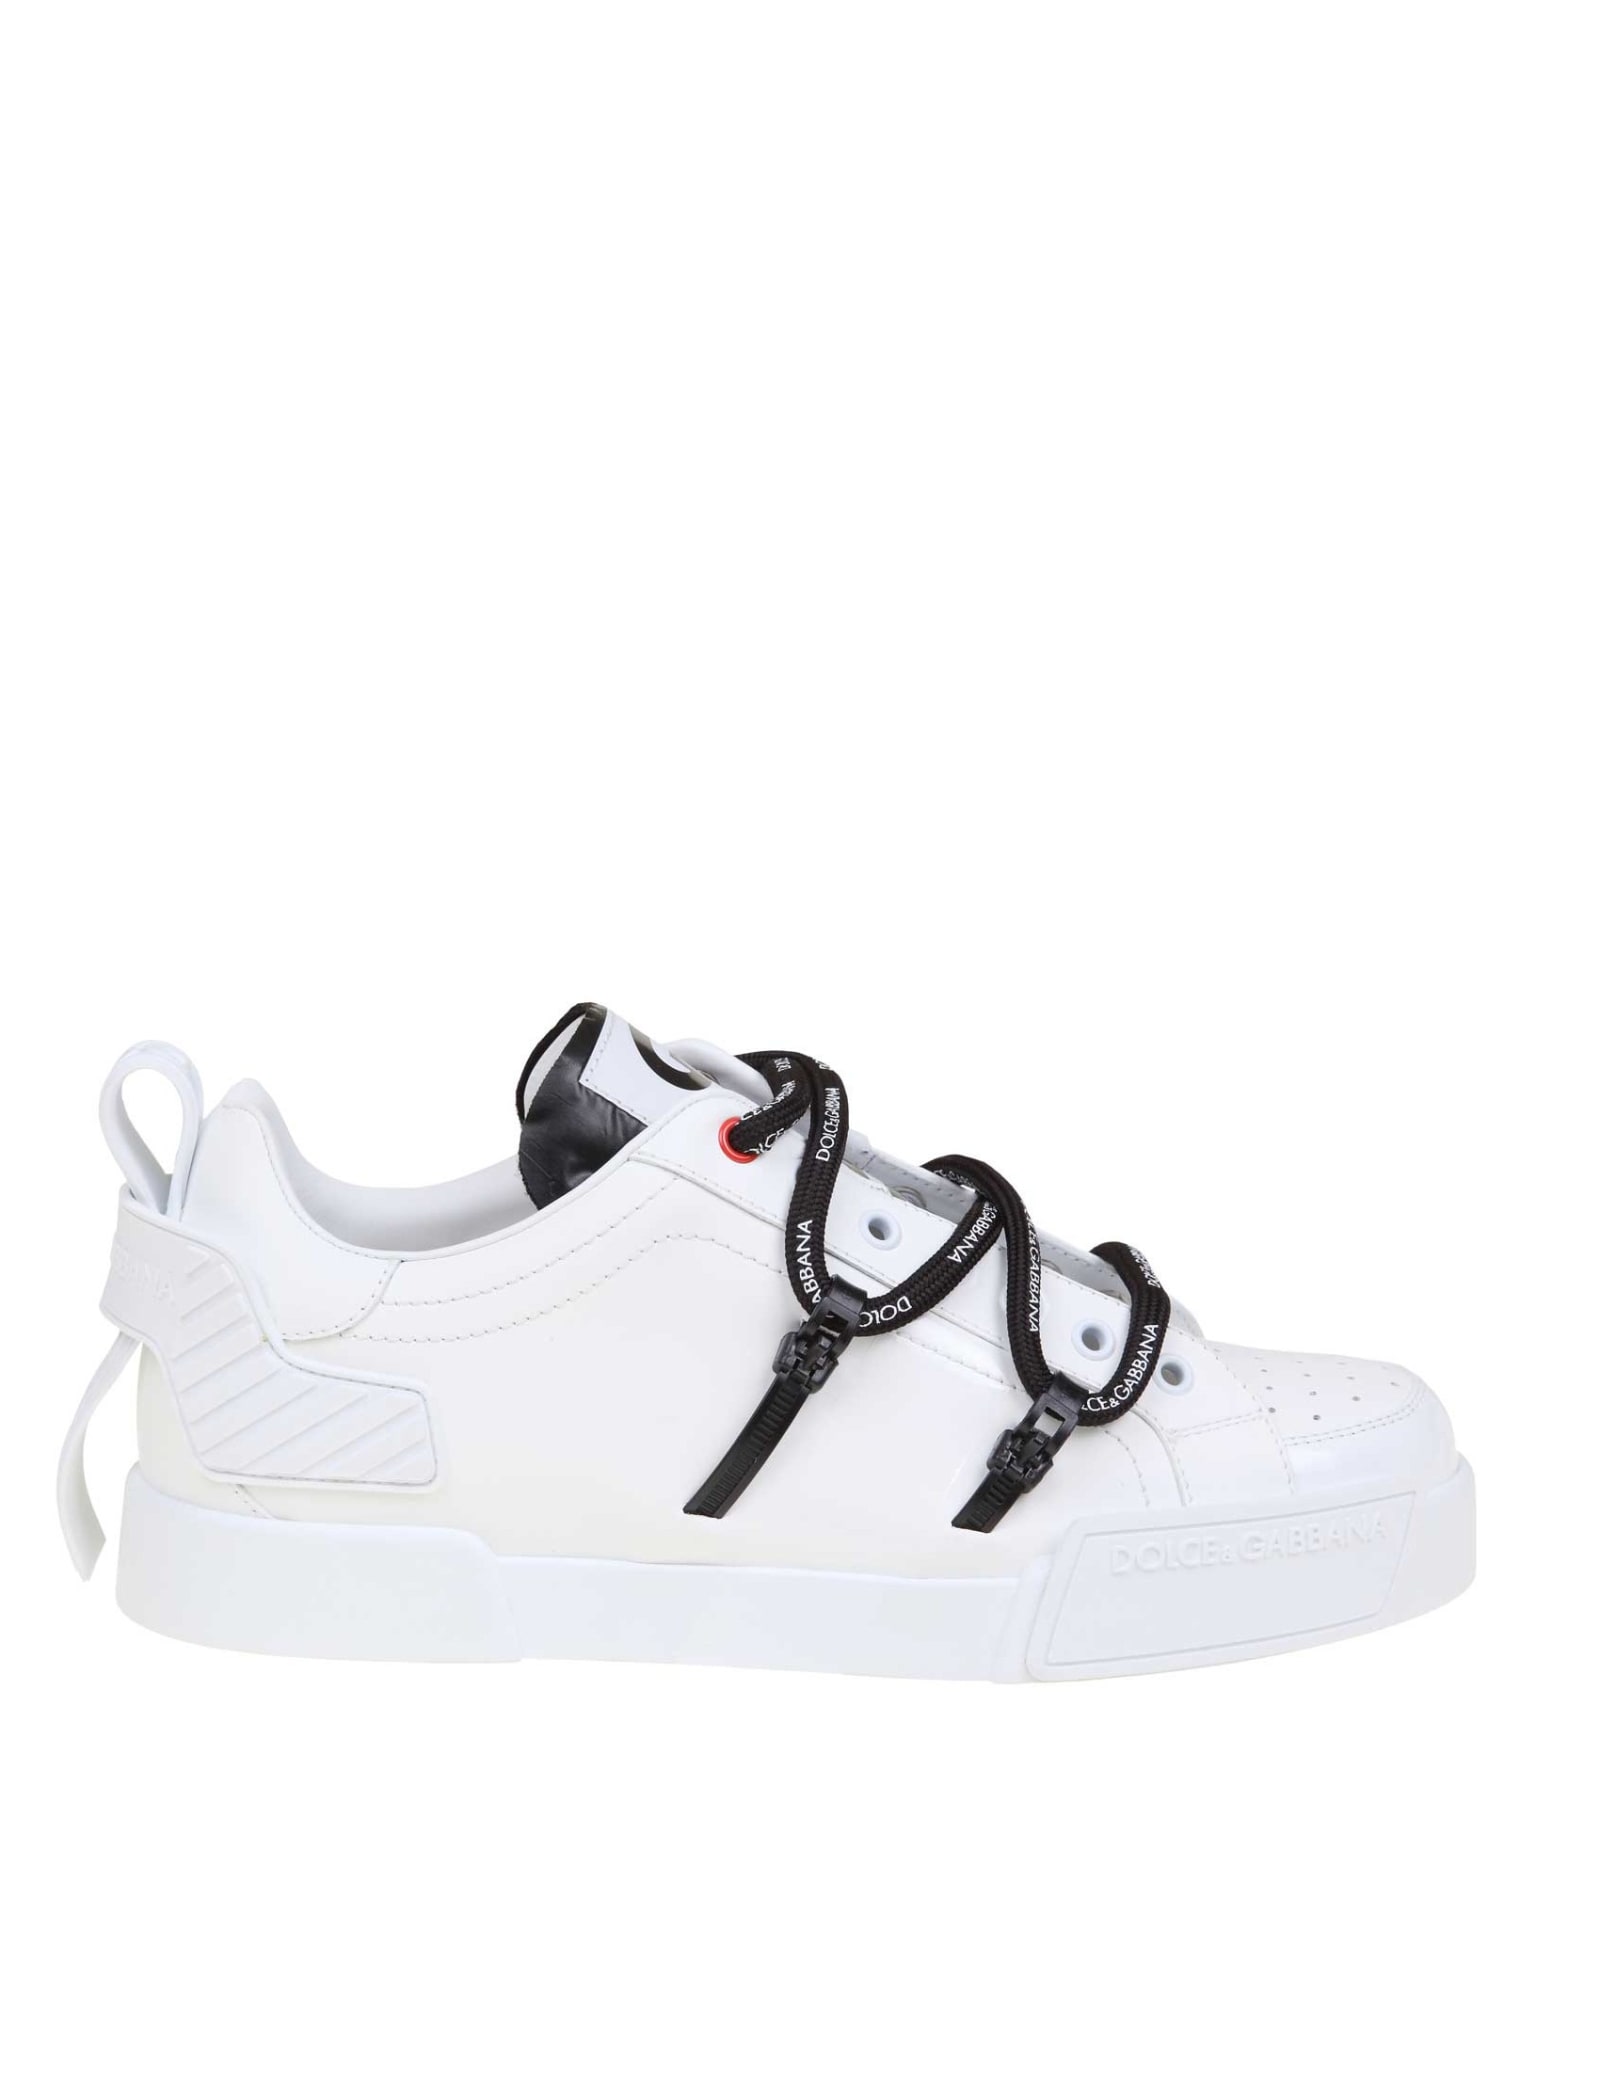 Dolce & Gabbana Portofino Sneakers In Calfskin And White Paint